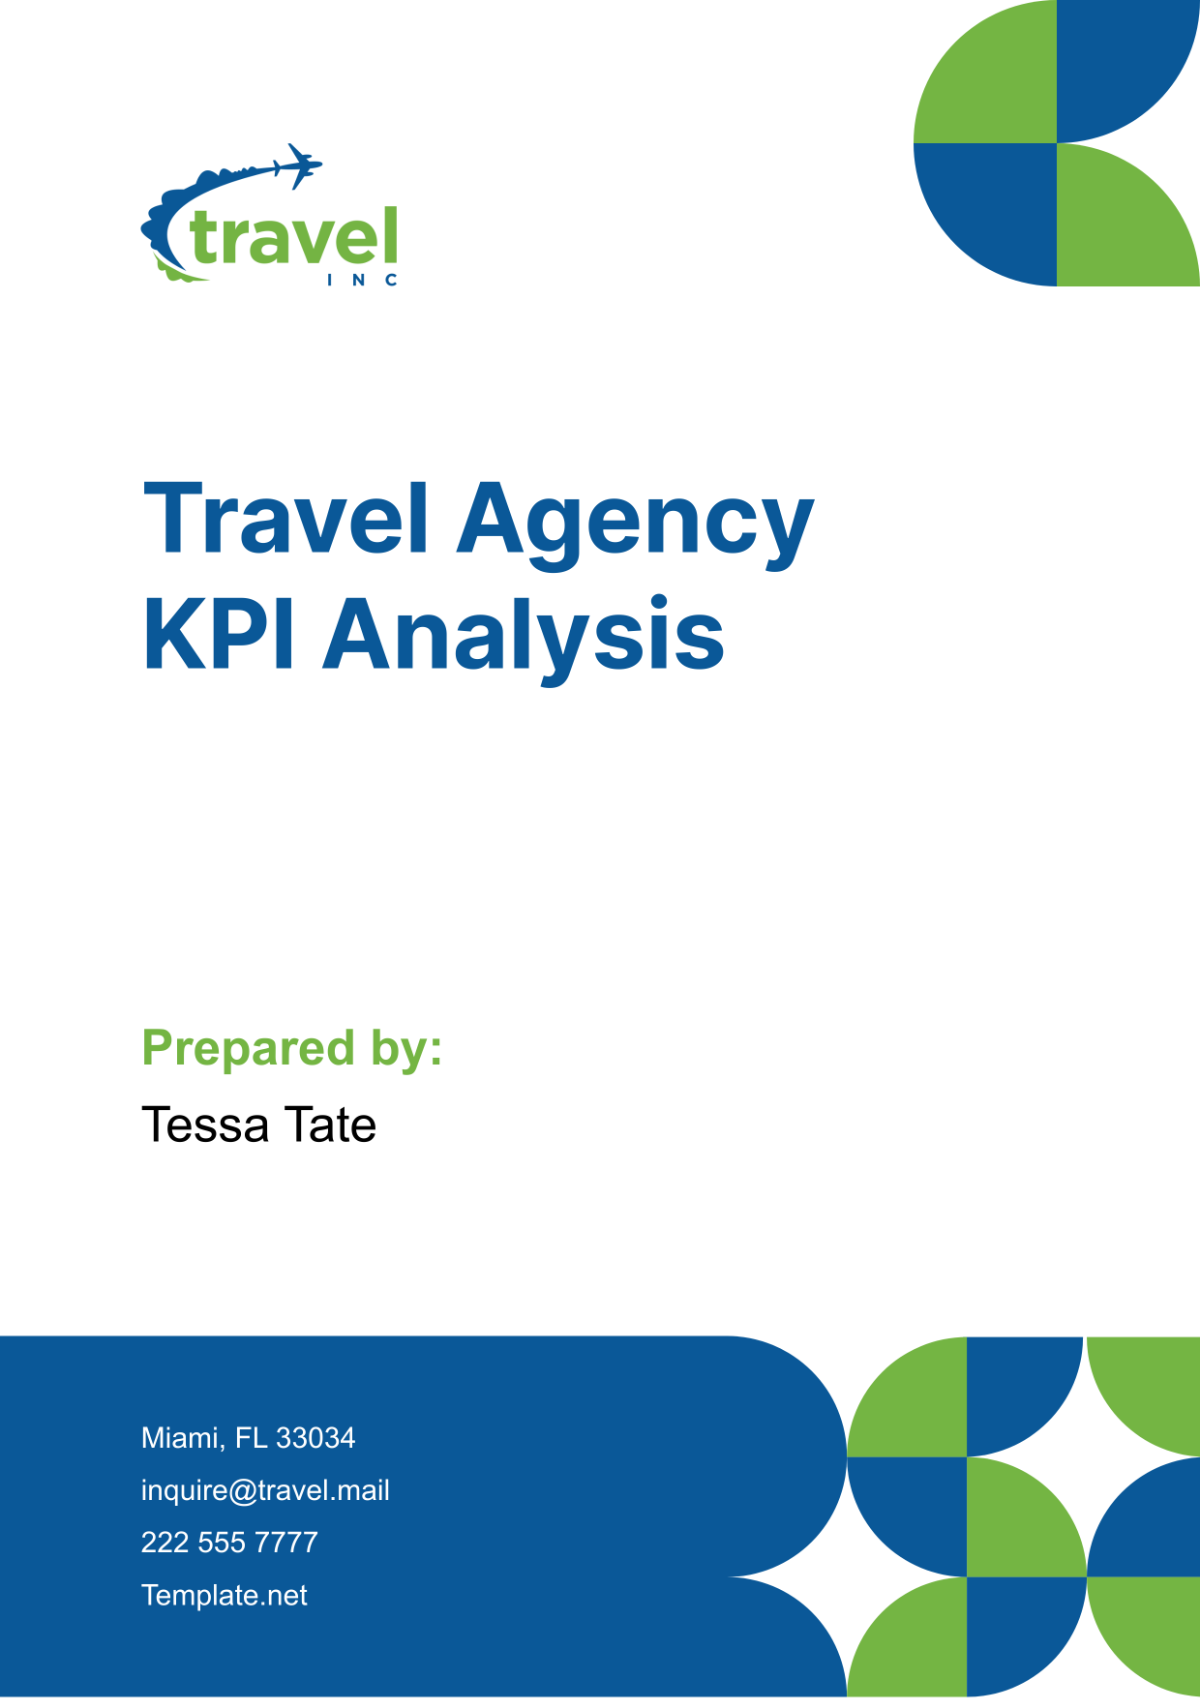 Travel Agency KPI Analysis Template